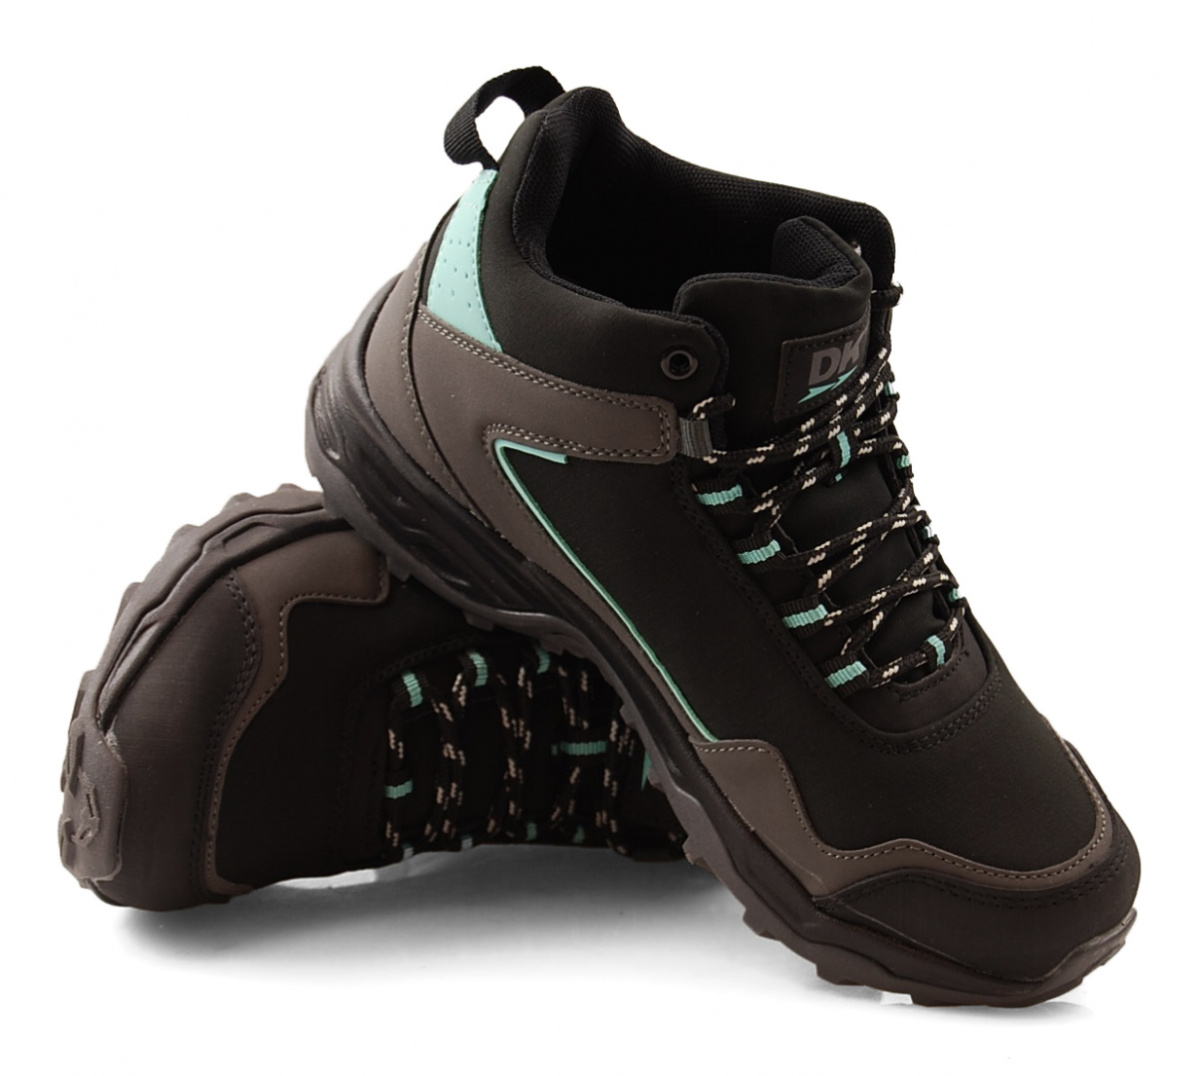 DK 1029 czarno-miętowe buty trekkingowe